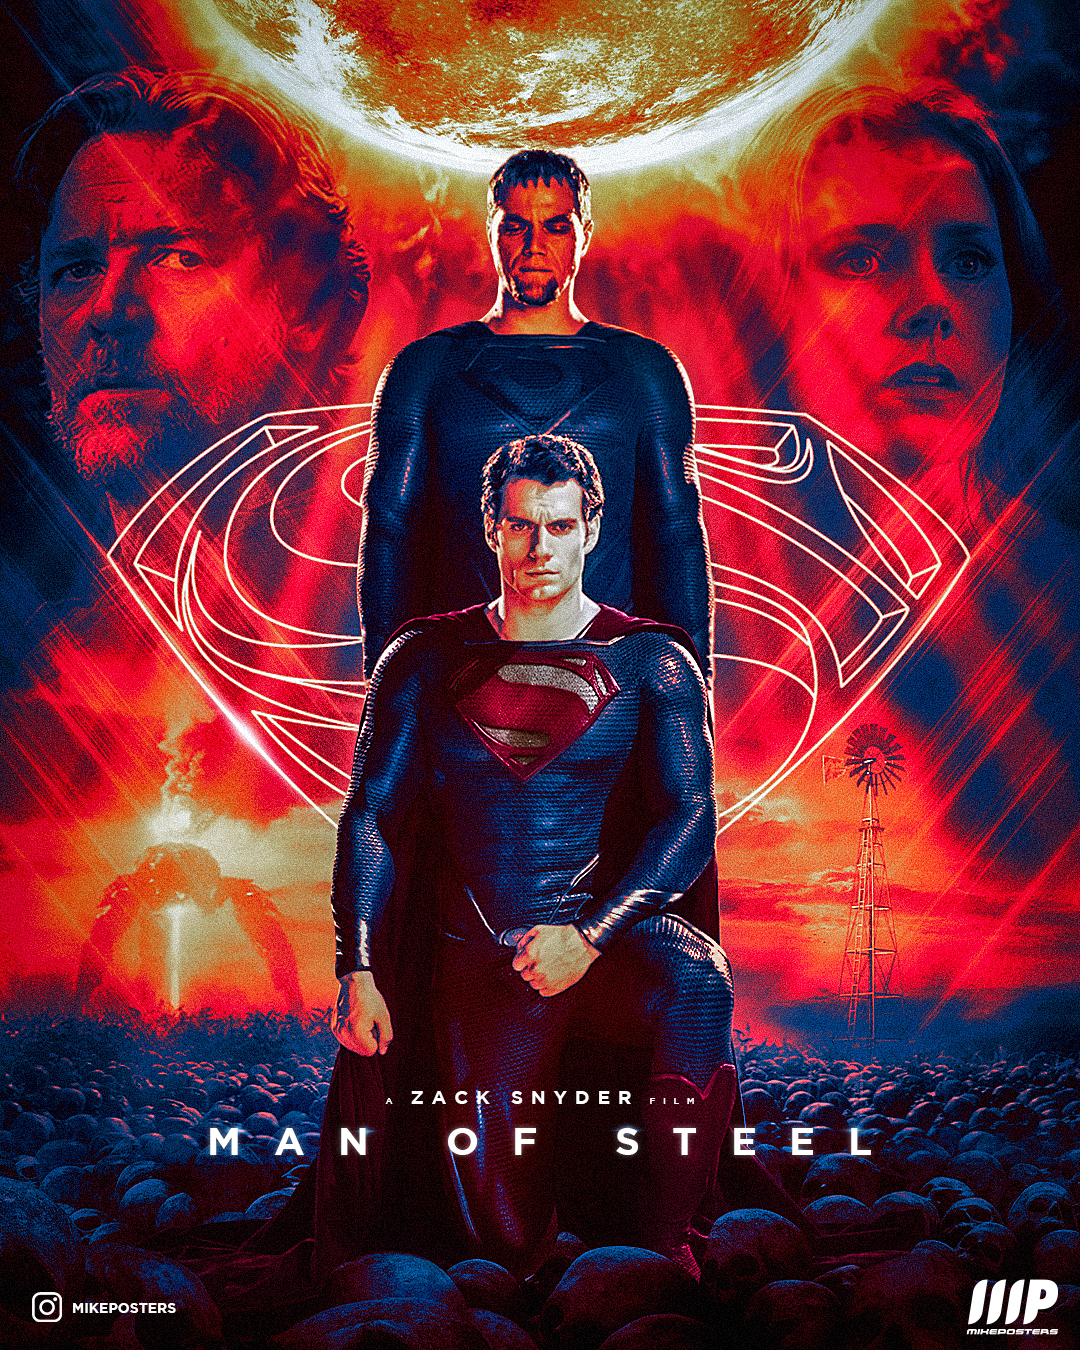 Man of Steel Movie Poster on Behance